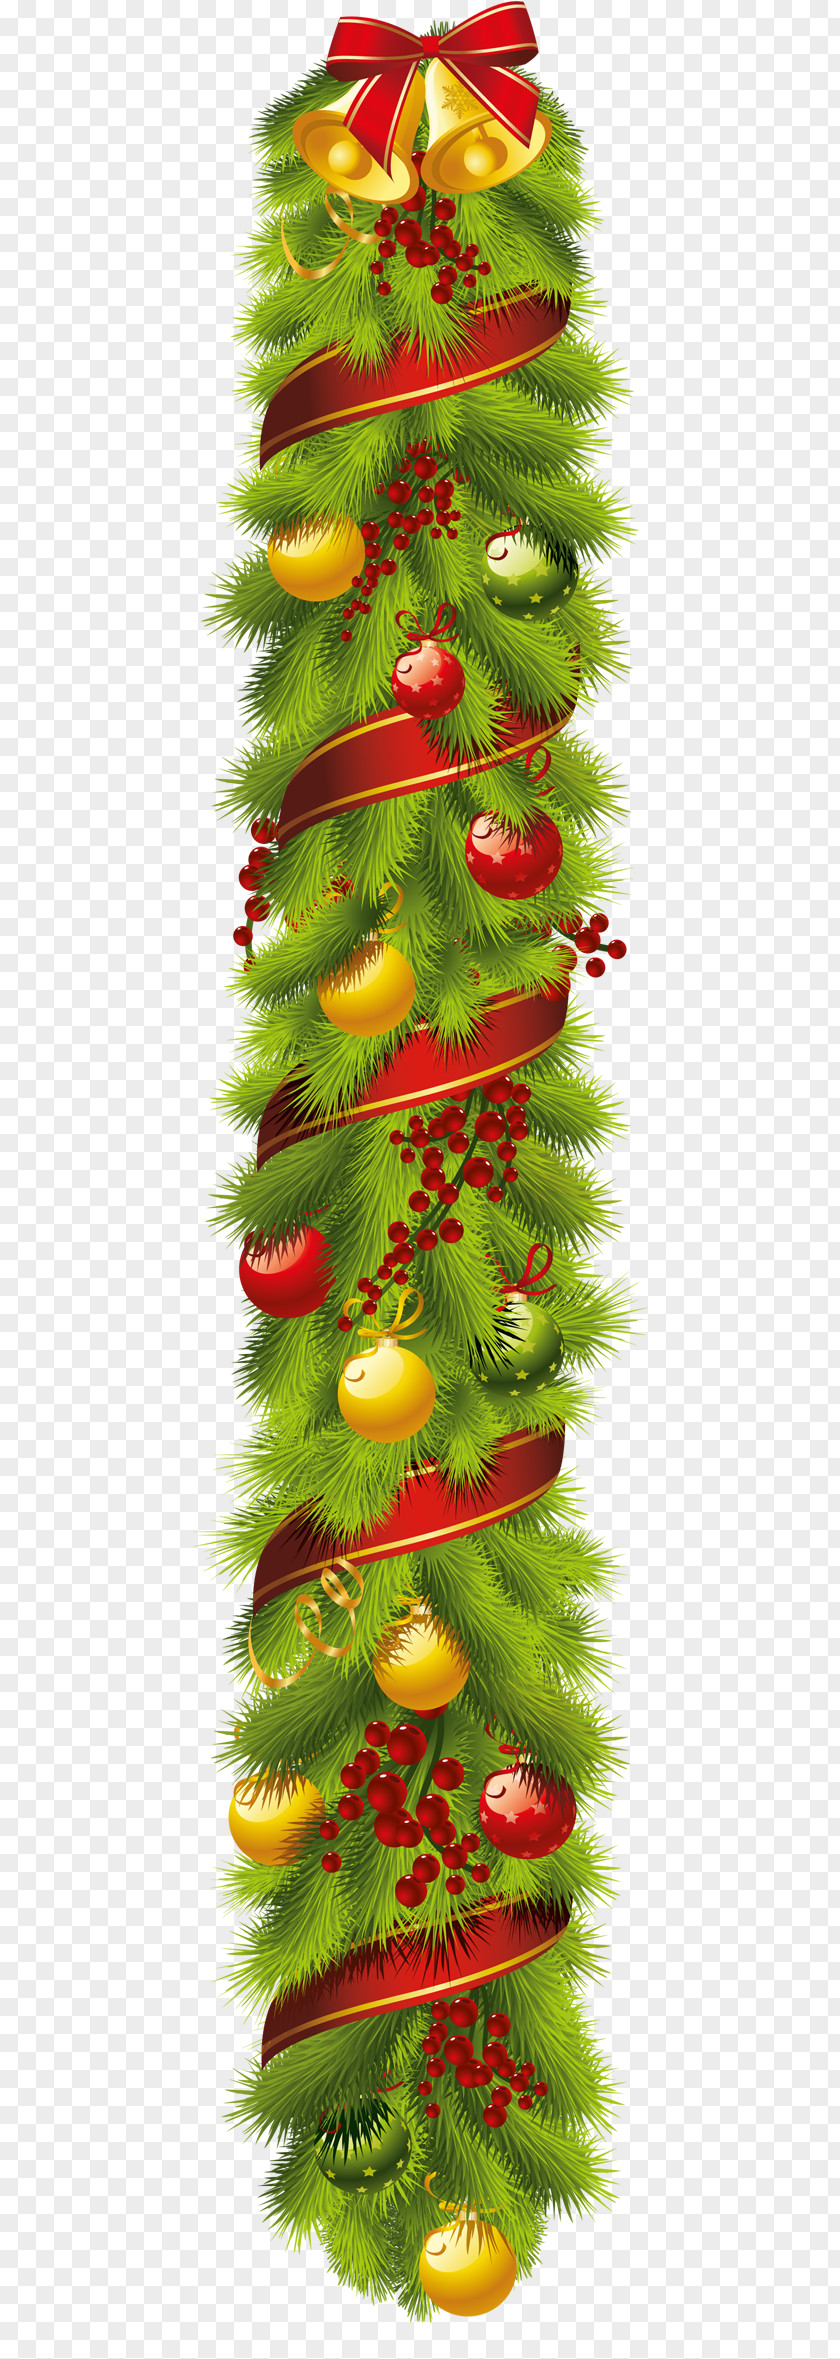 Garland Christmas Ornament Clip Art PNG